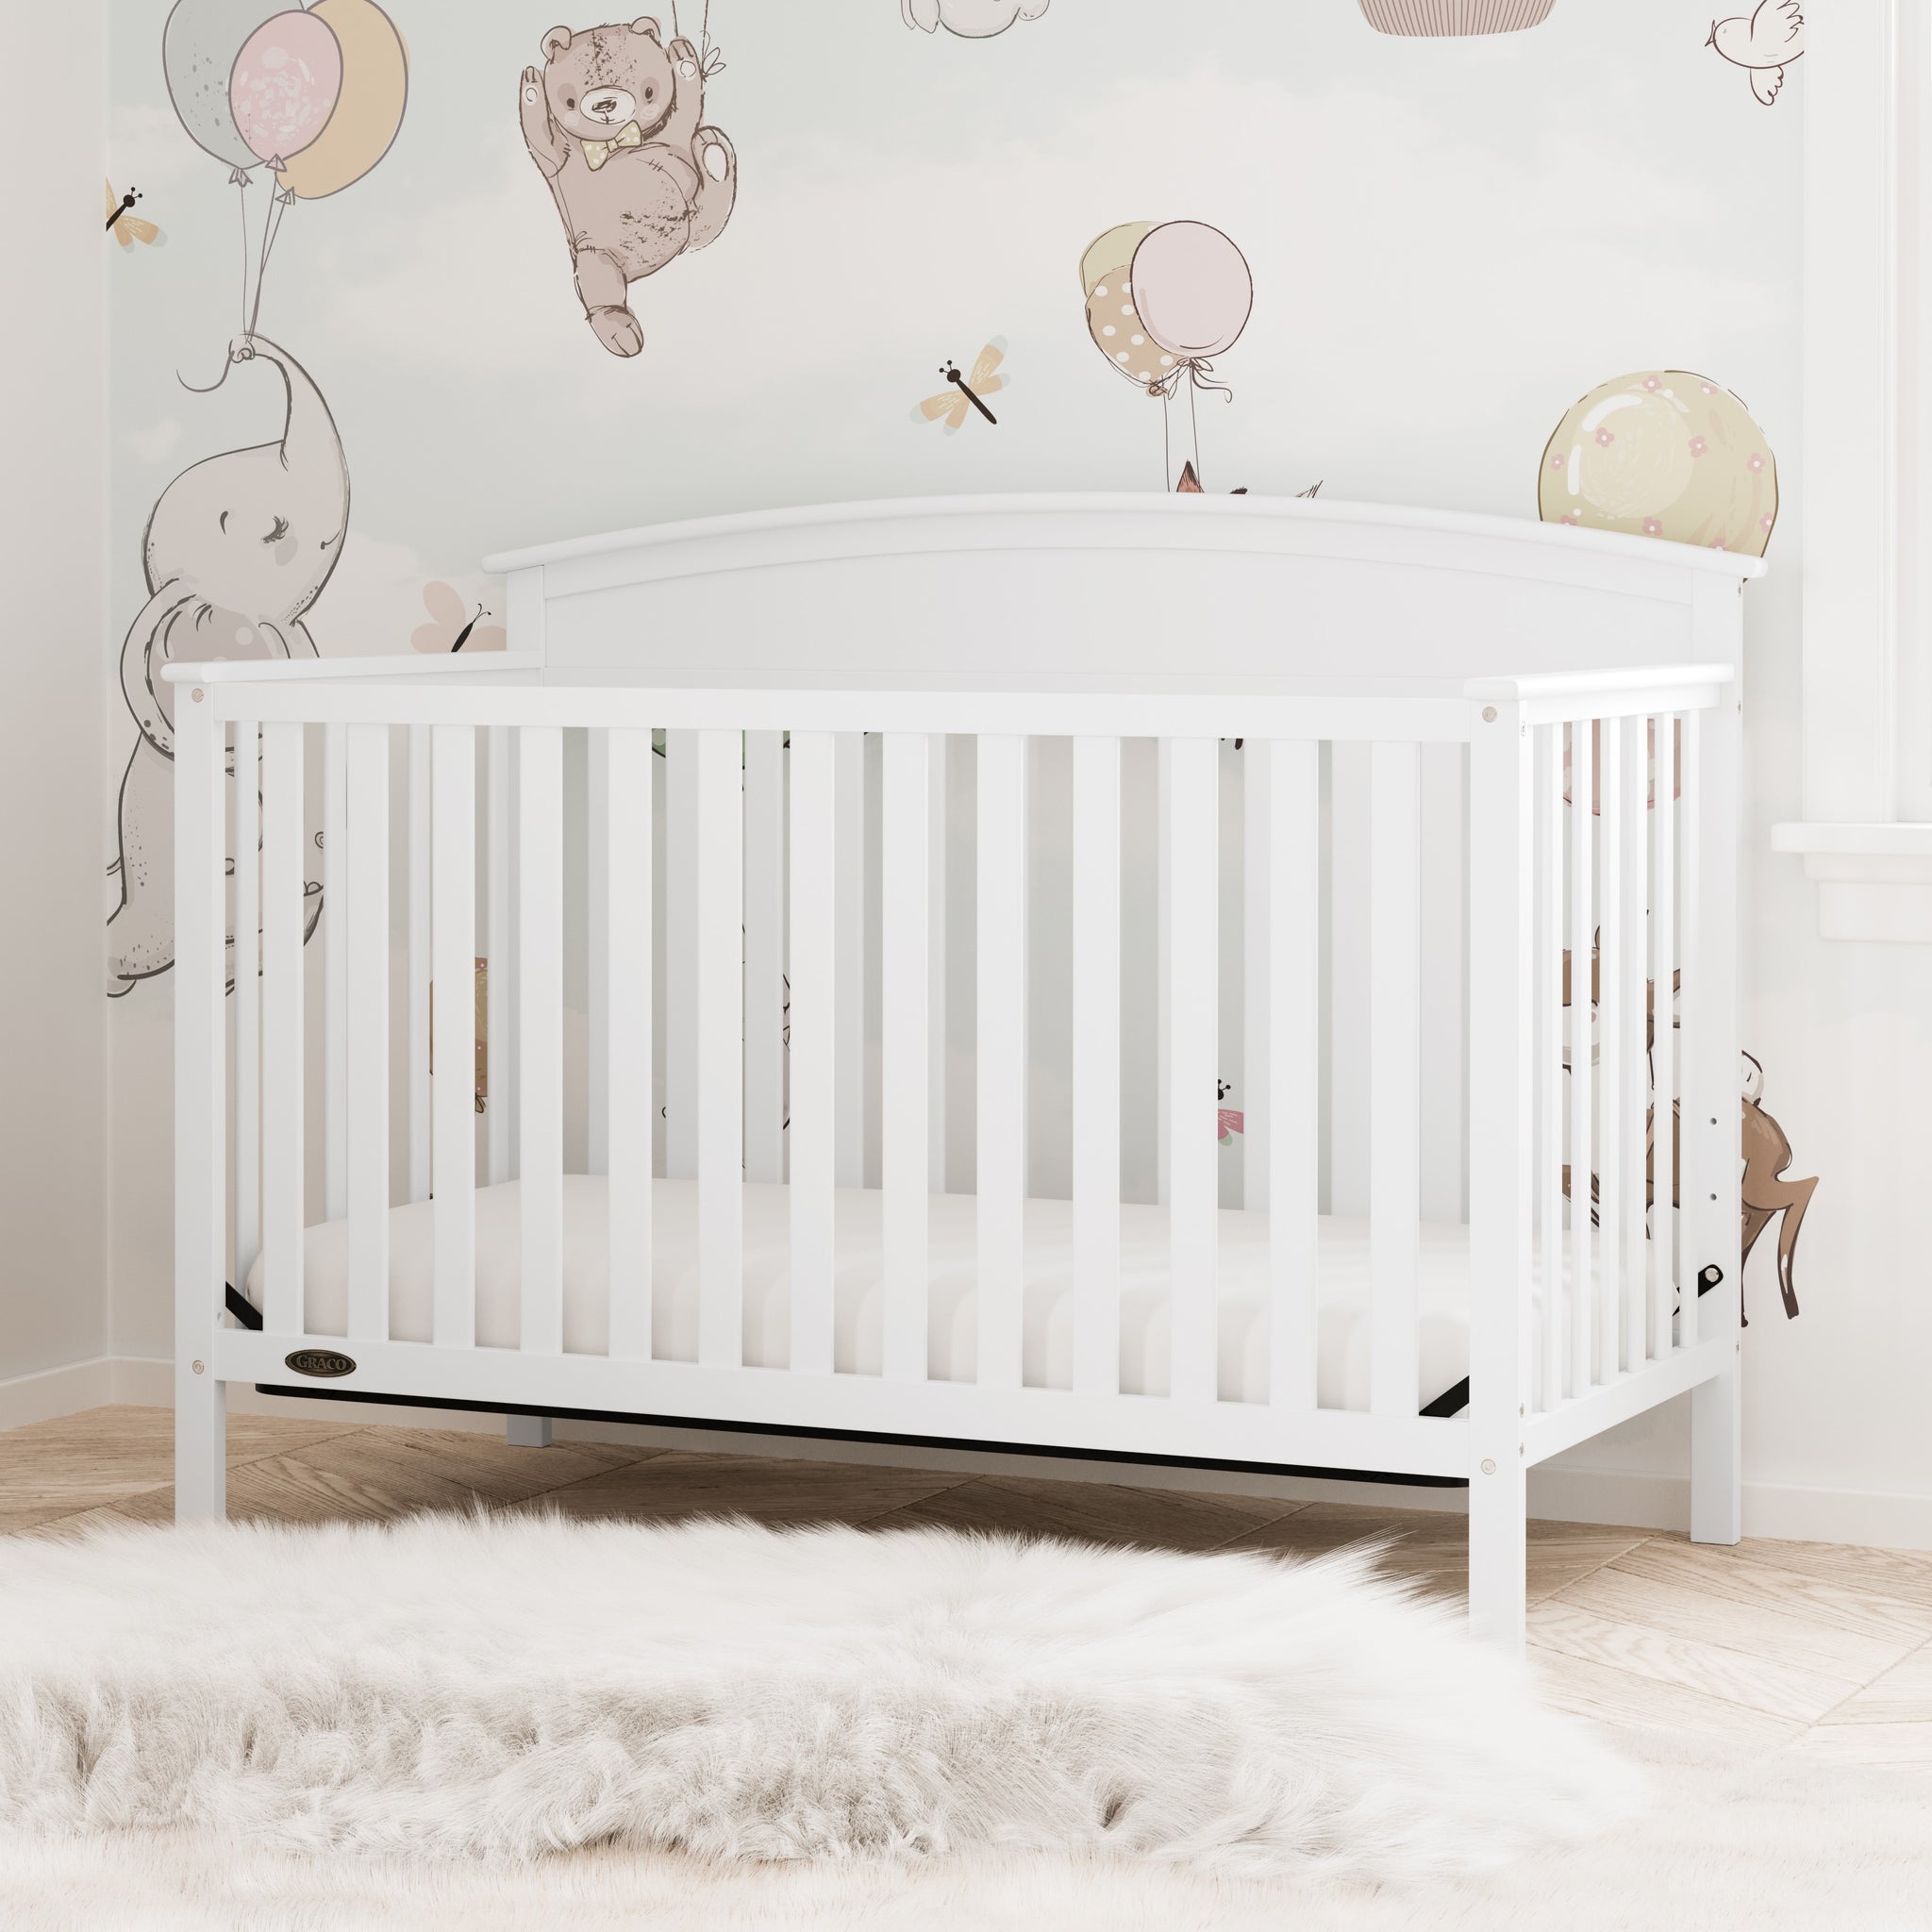 White crib in nursery